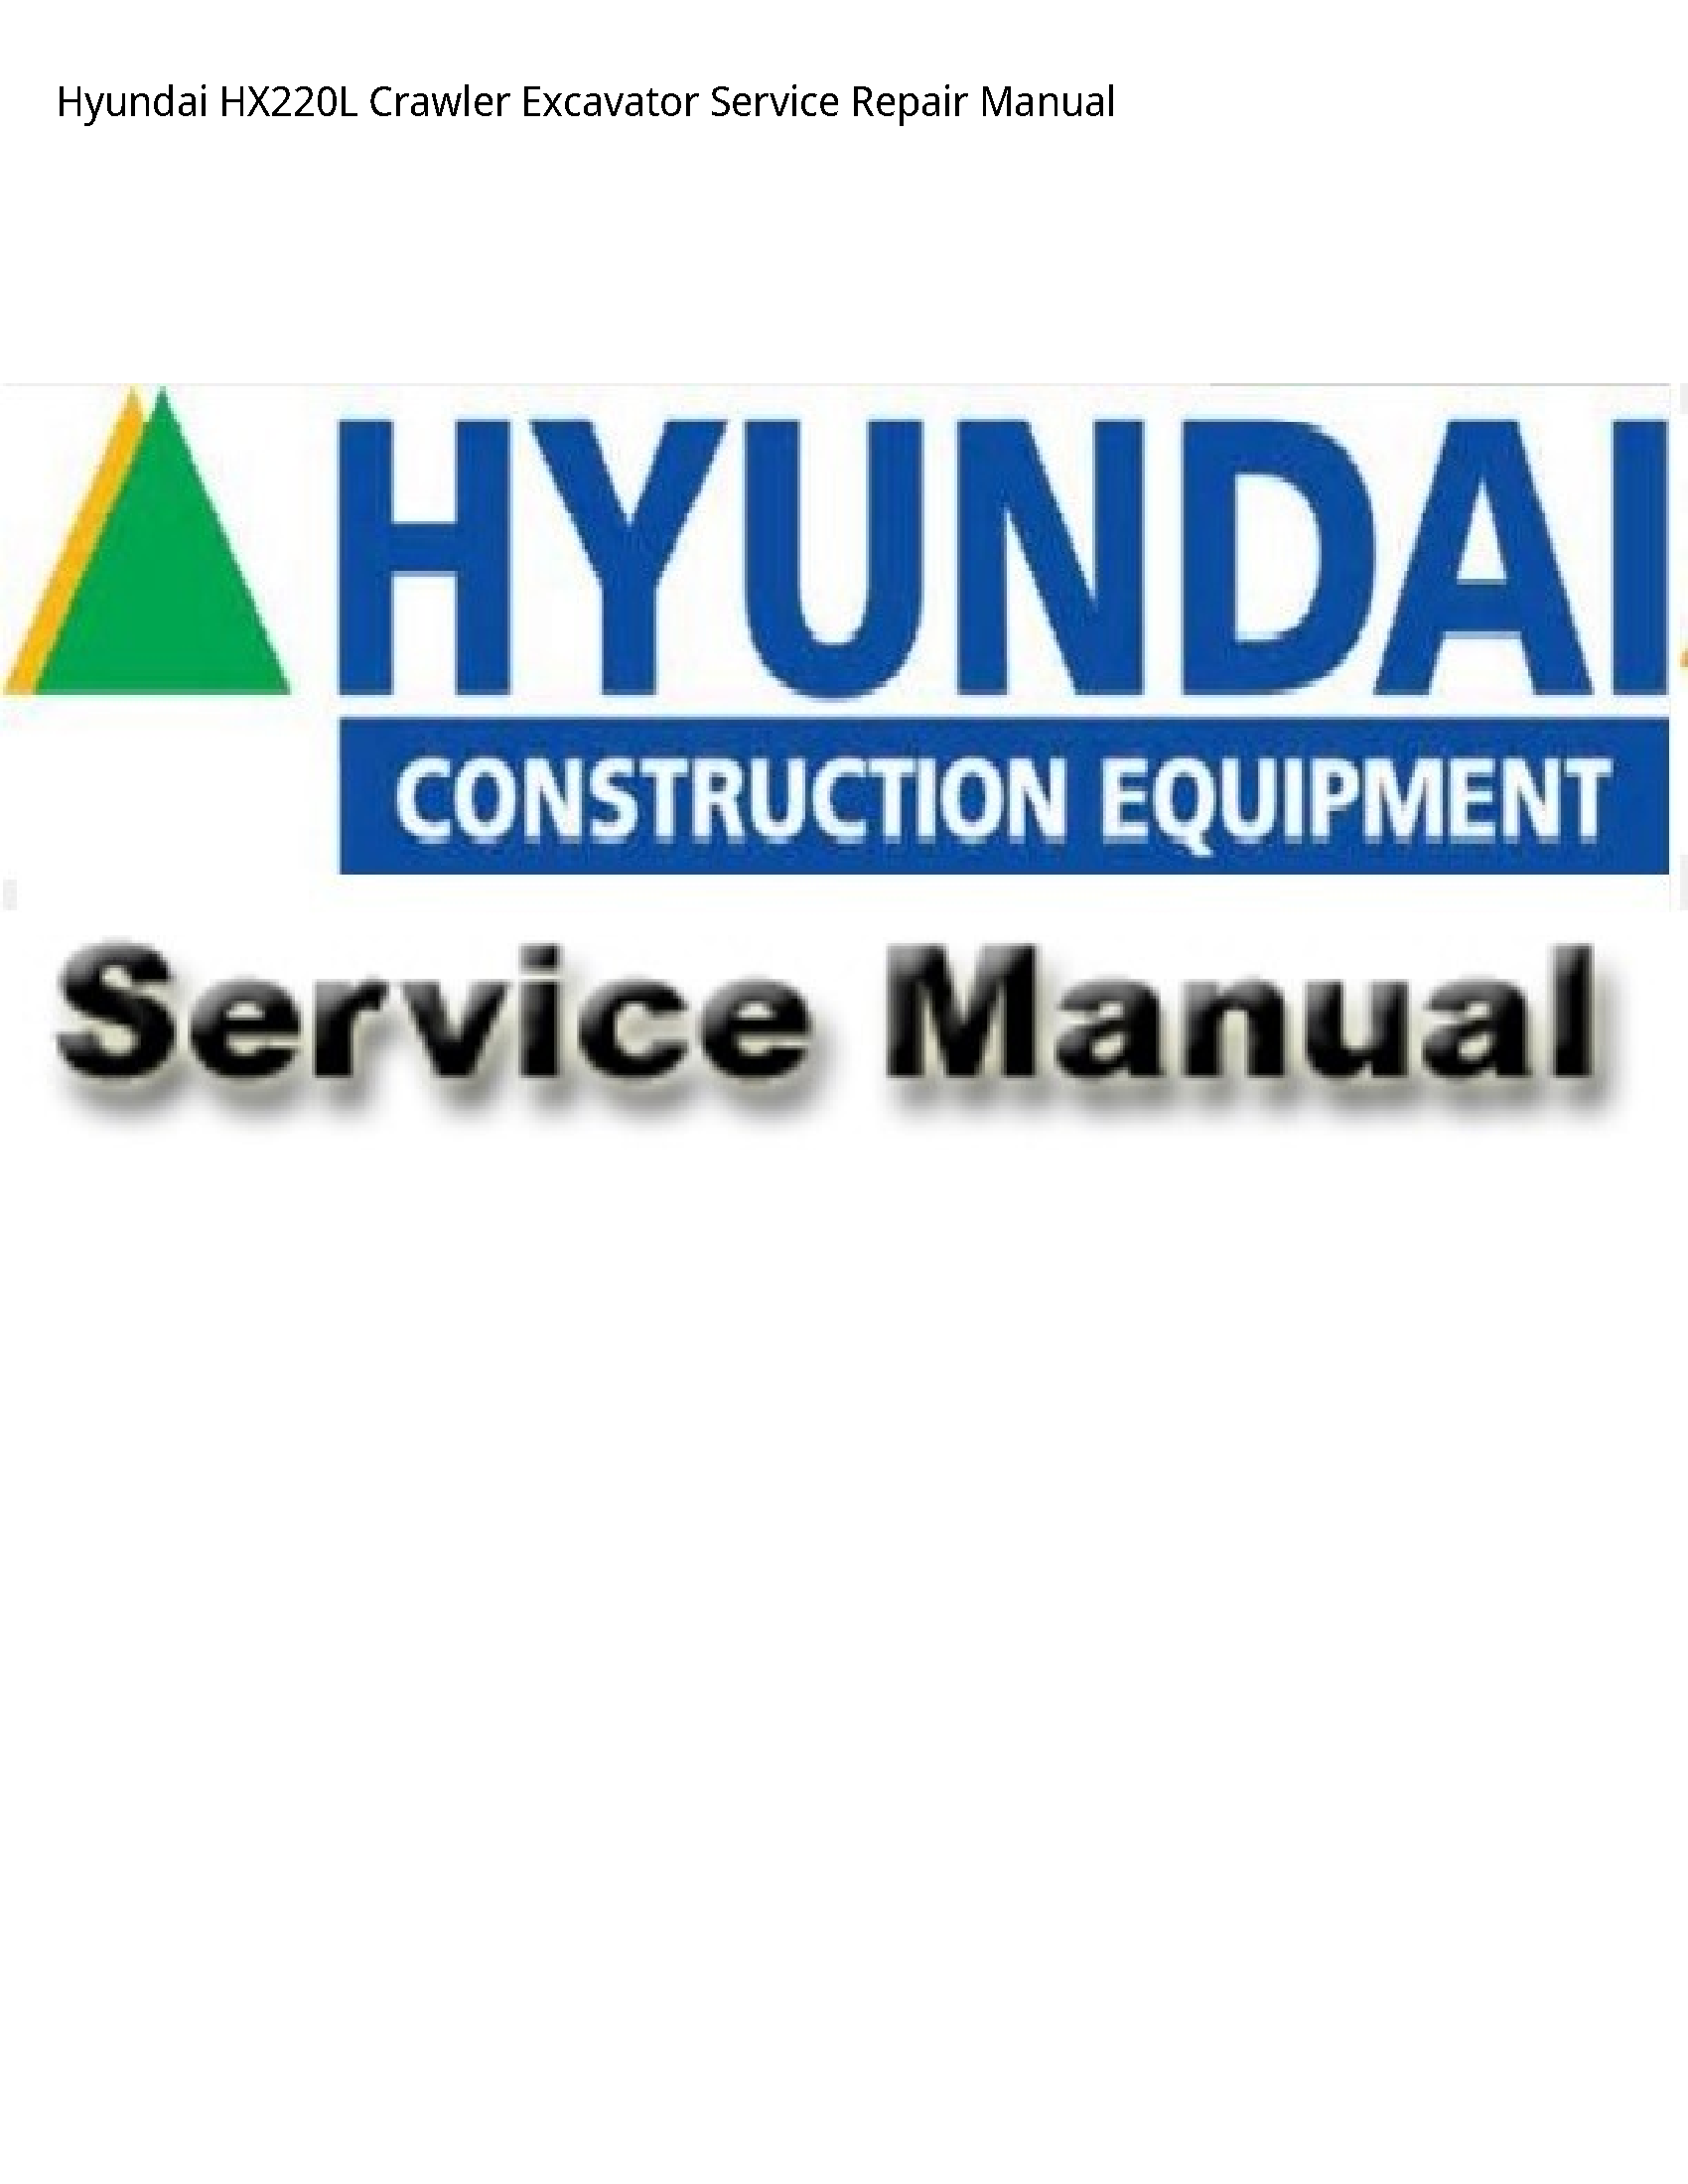 Hyundai HX220L Crawler Excavator manual